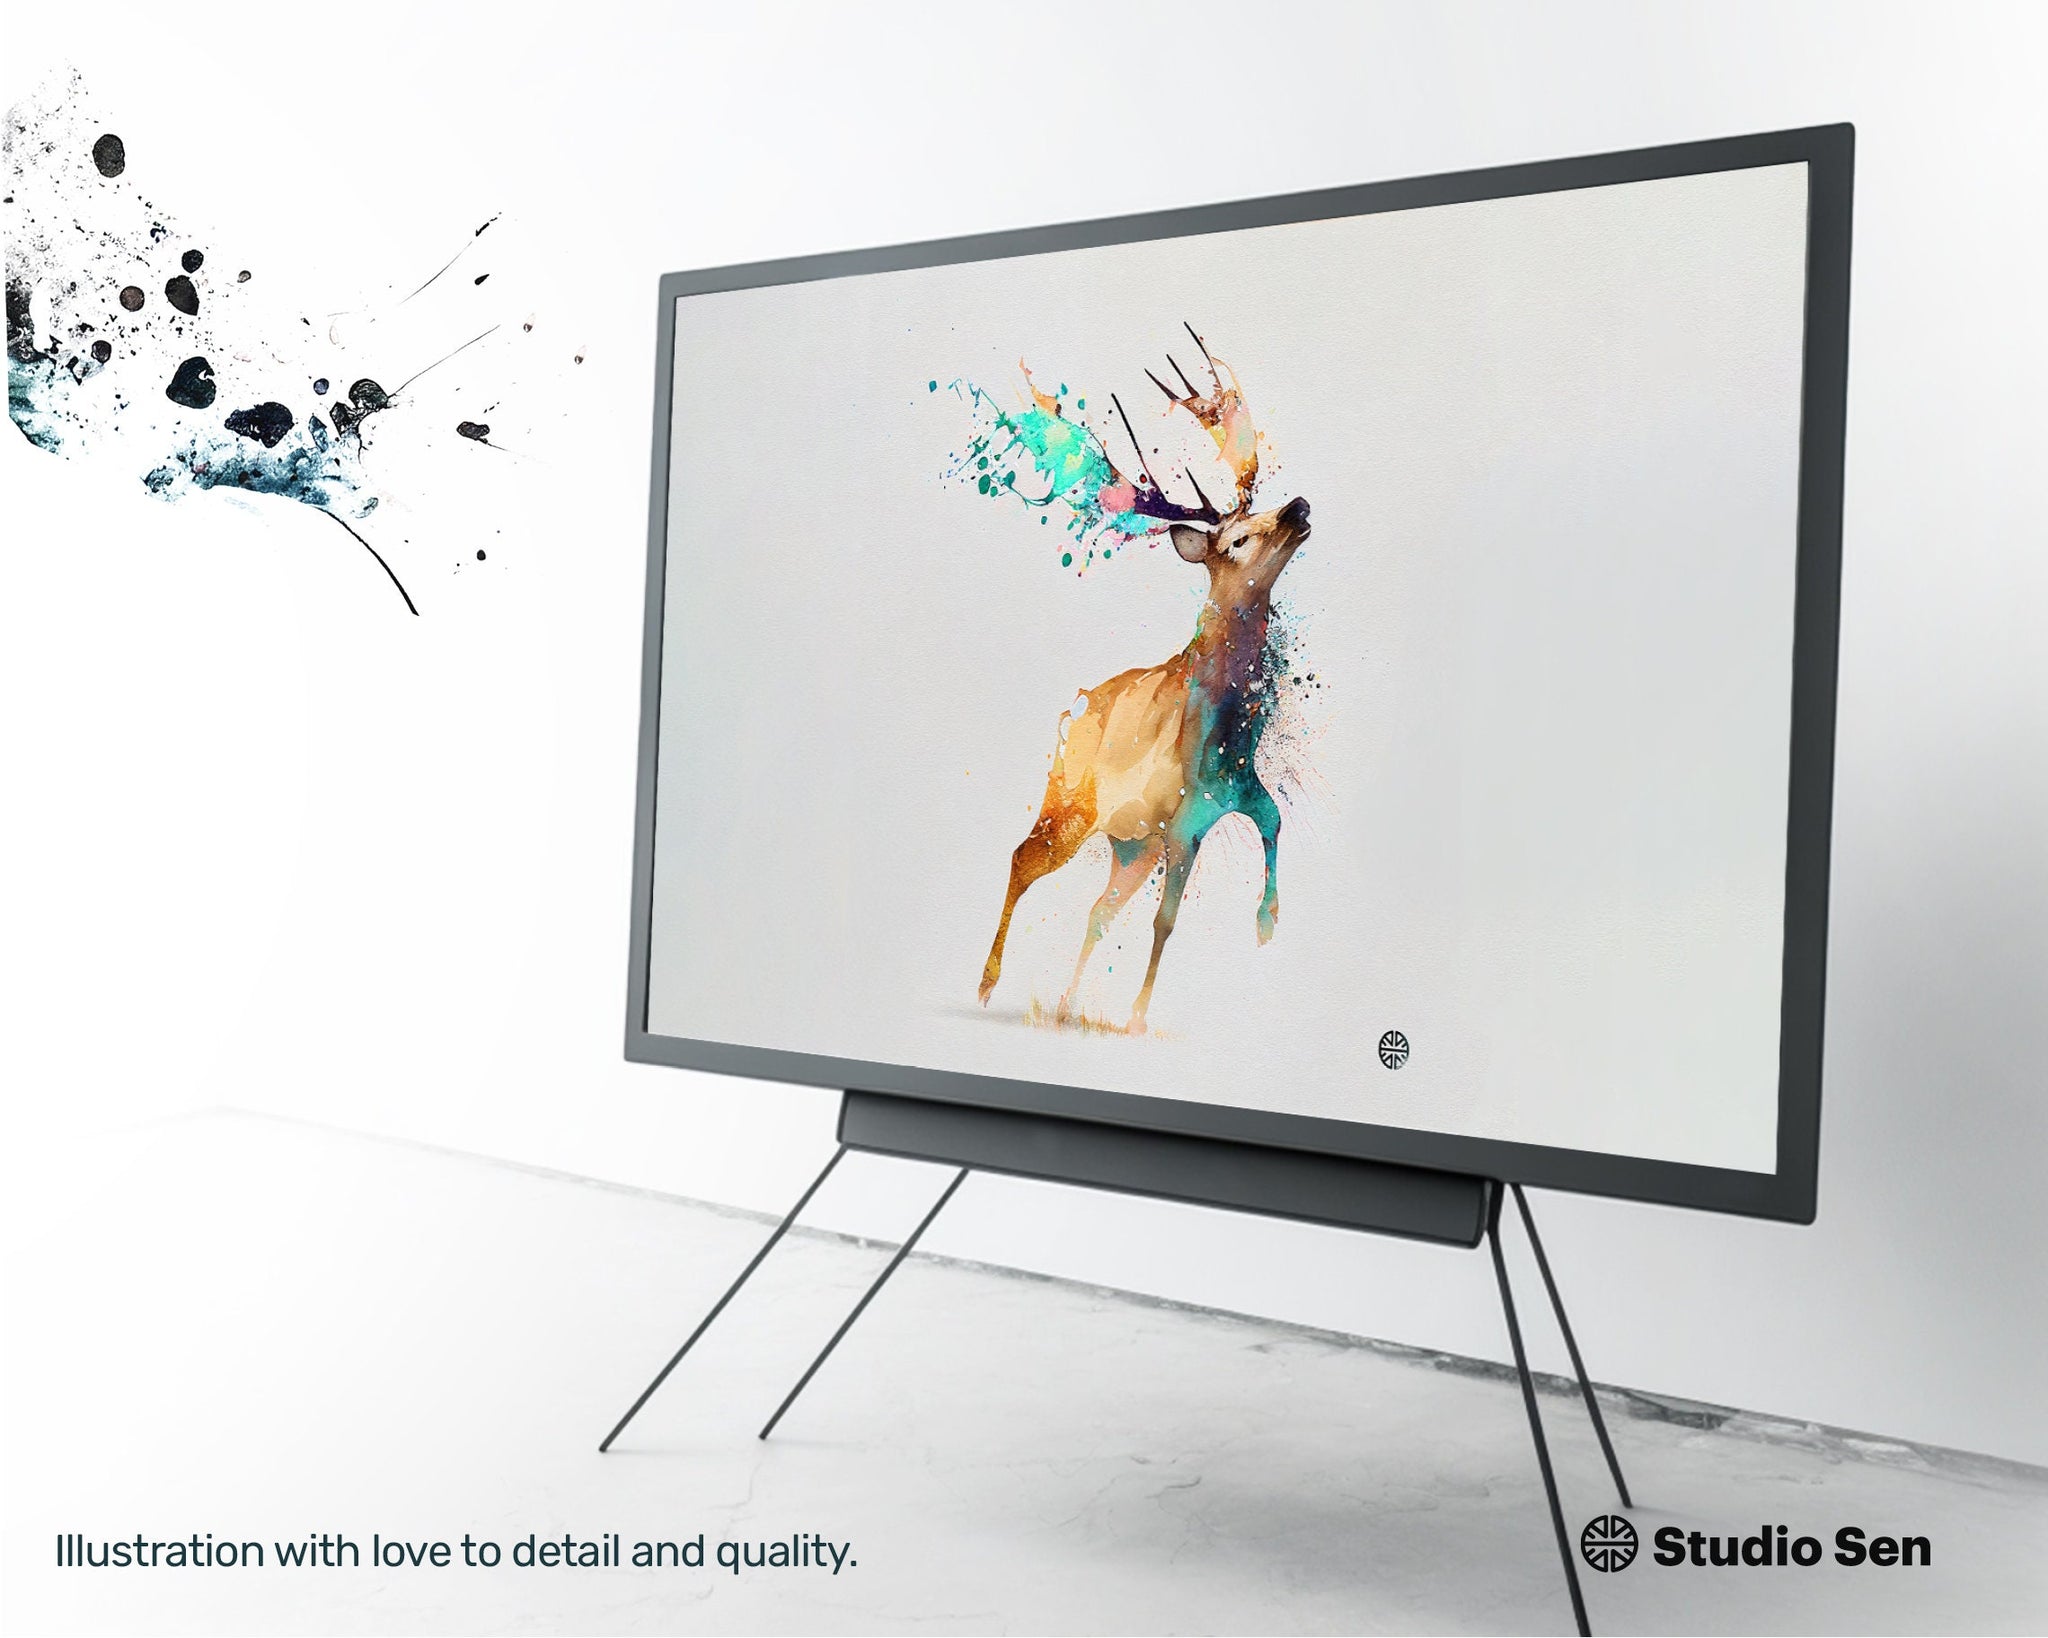 Samsung Art TV, Deer Wild, premium download, drops and splashes, friendly wallpaper, art for kids